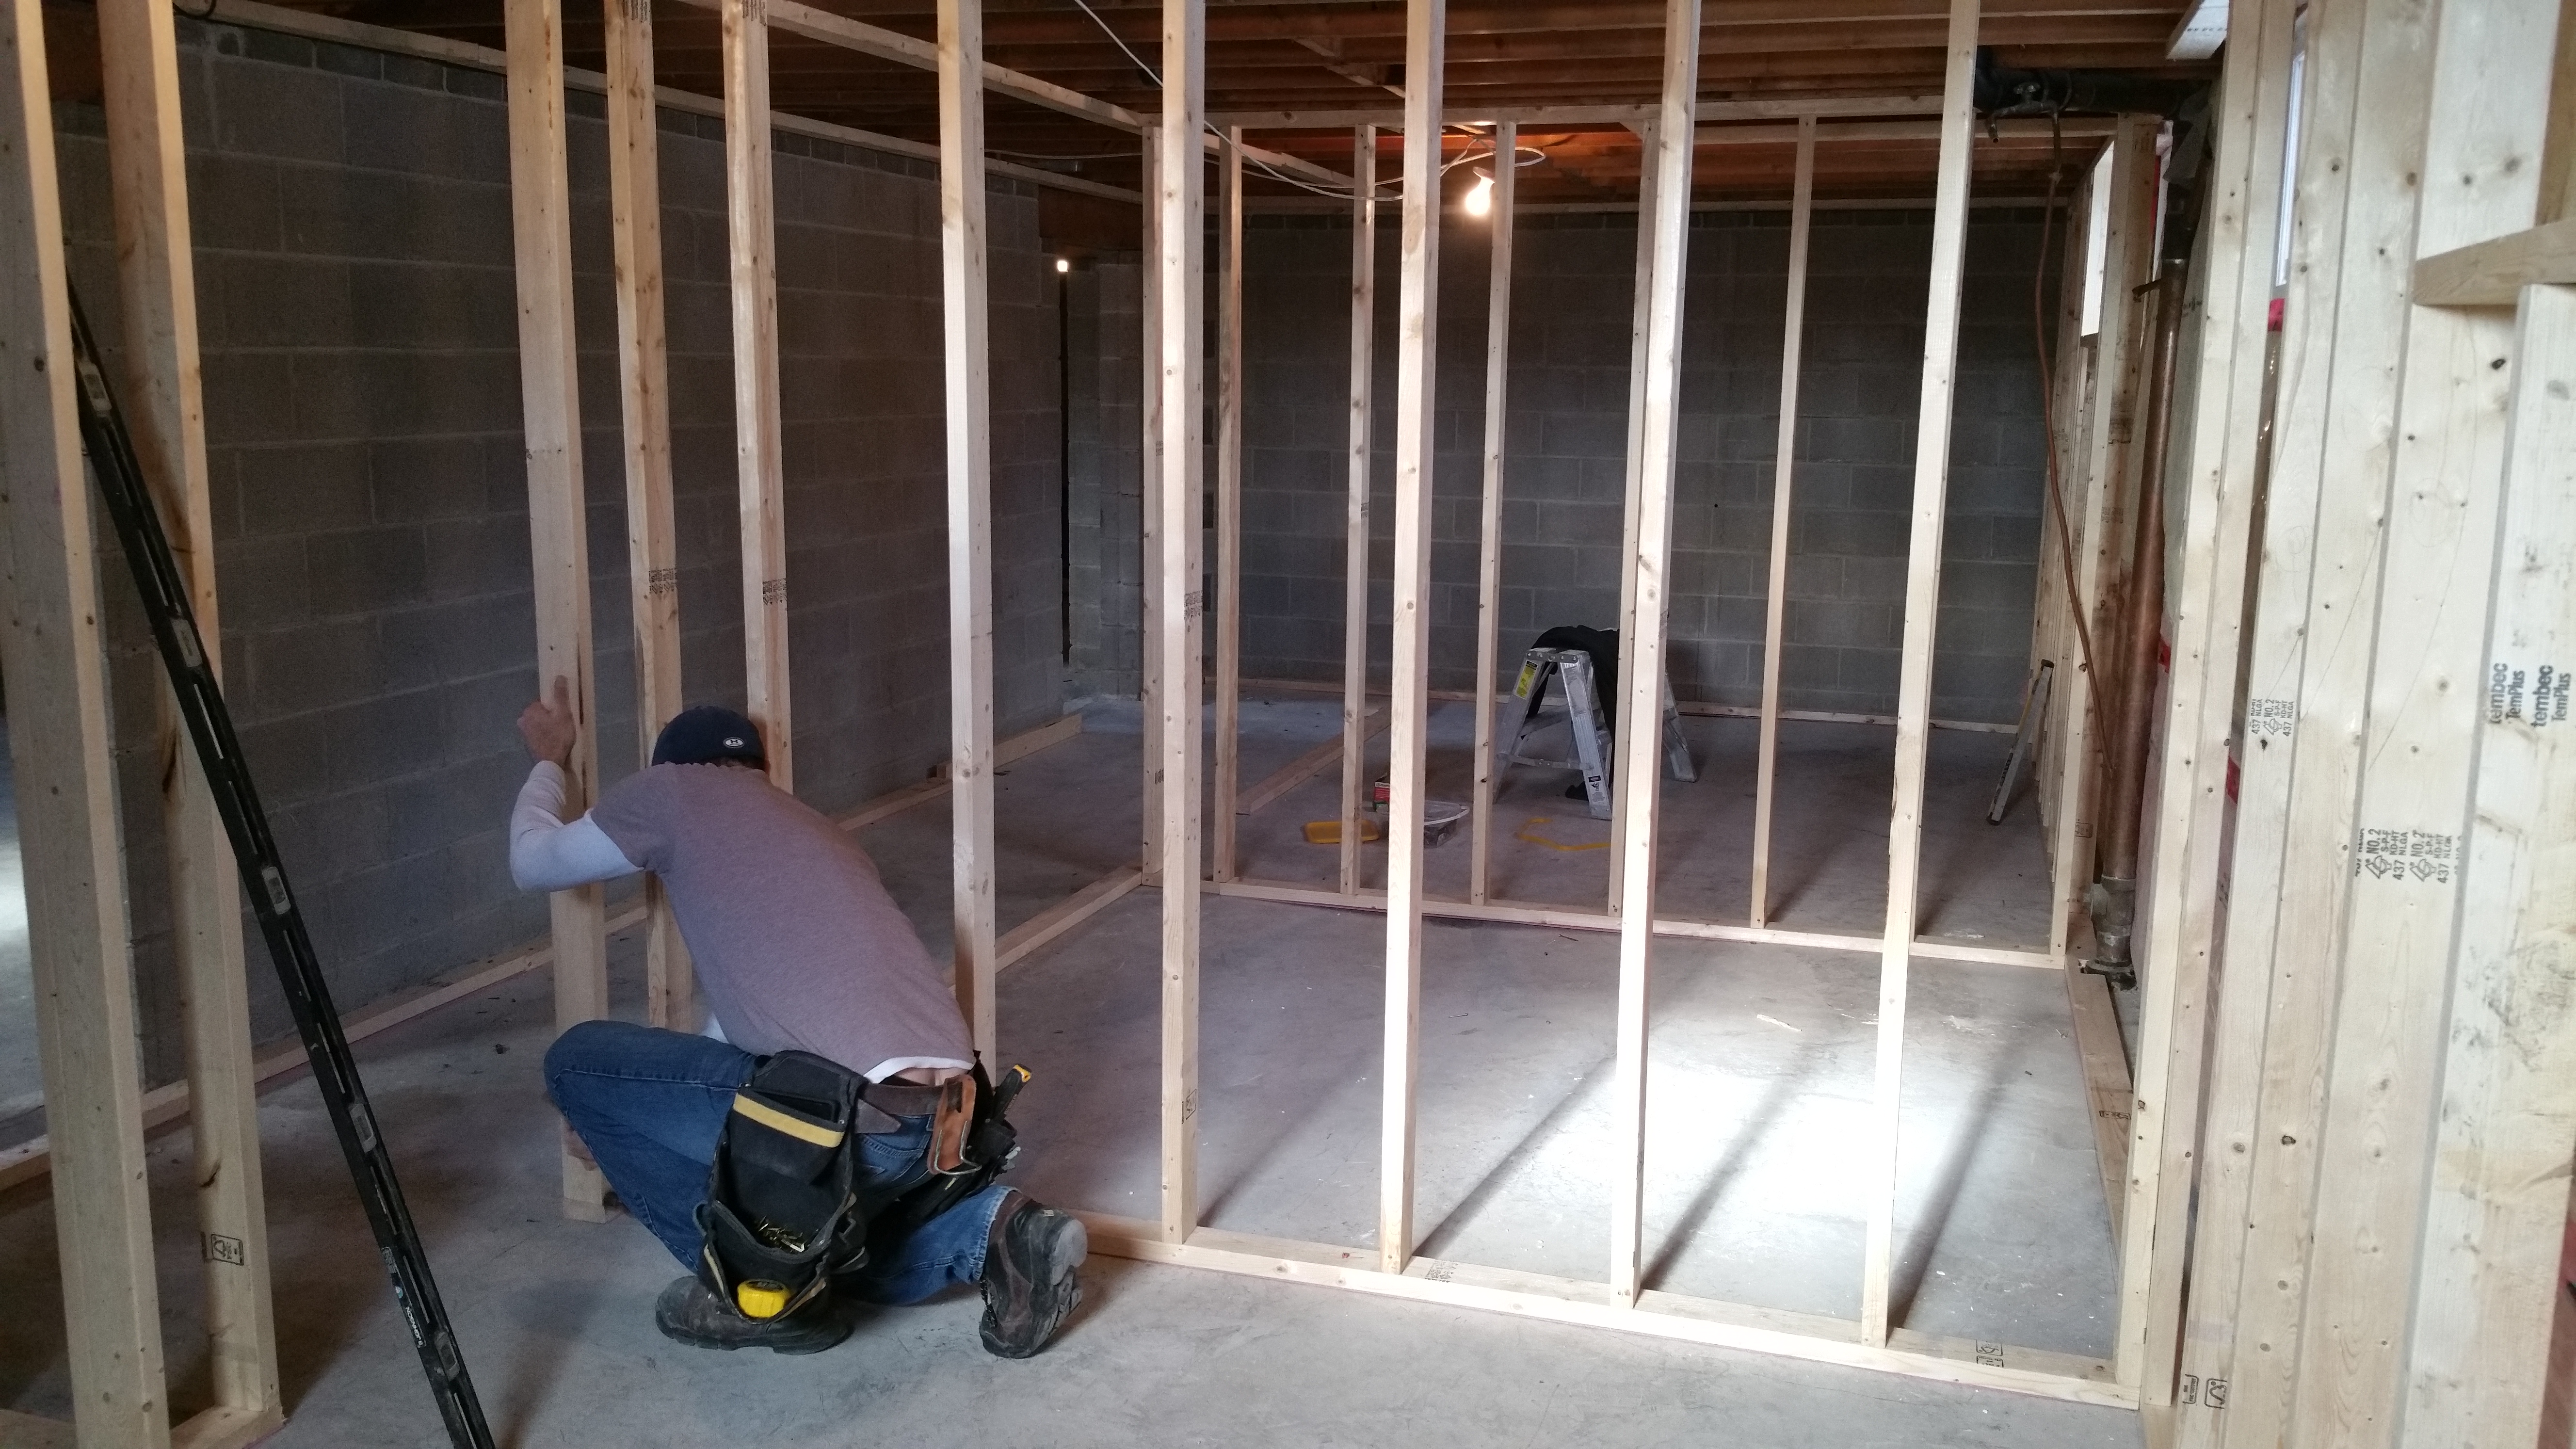 Build Tru Group basement renovation in progress